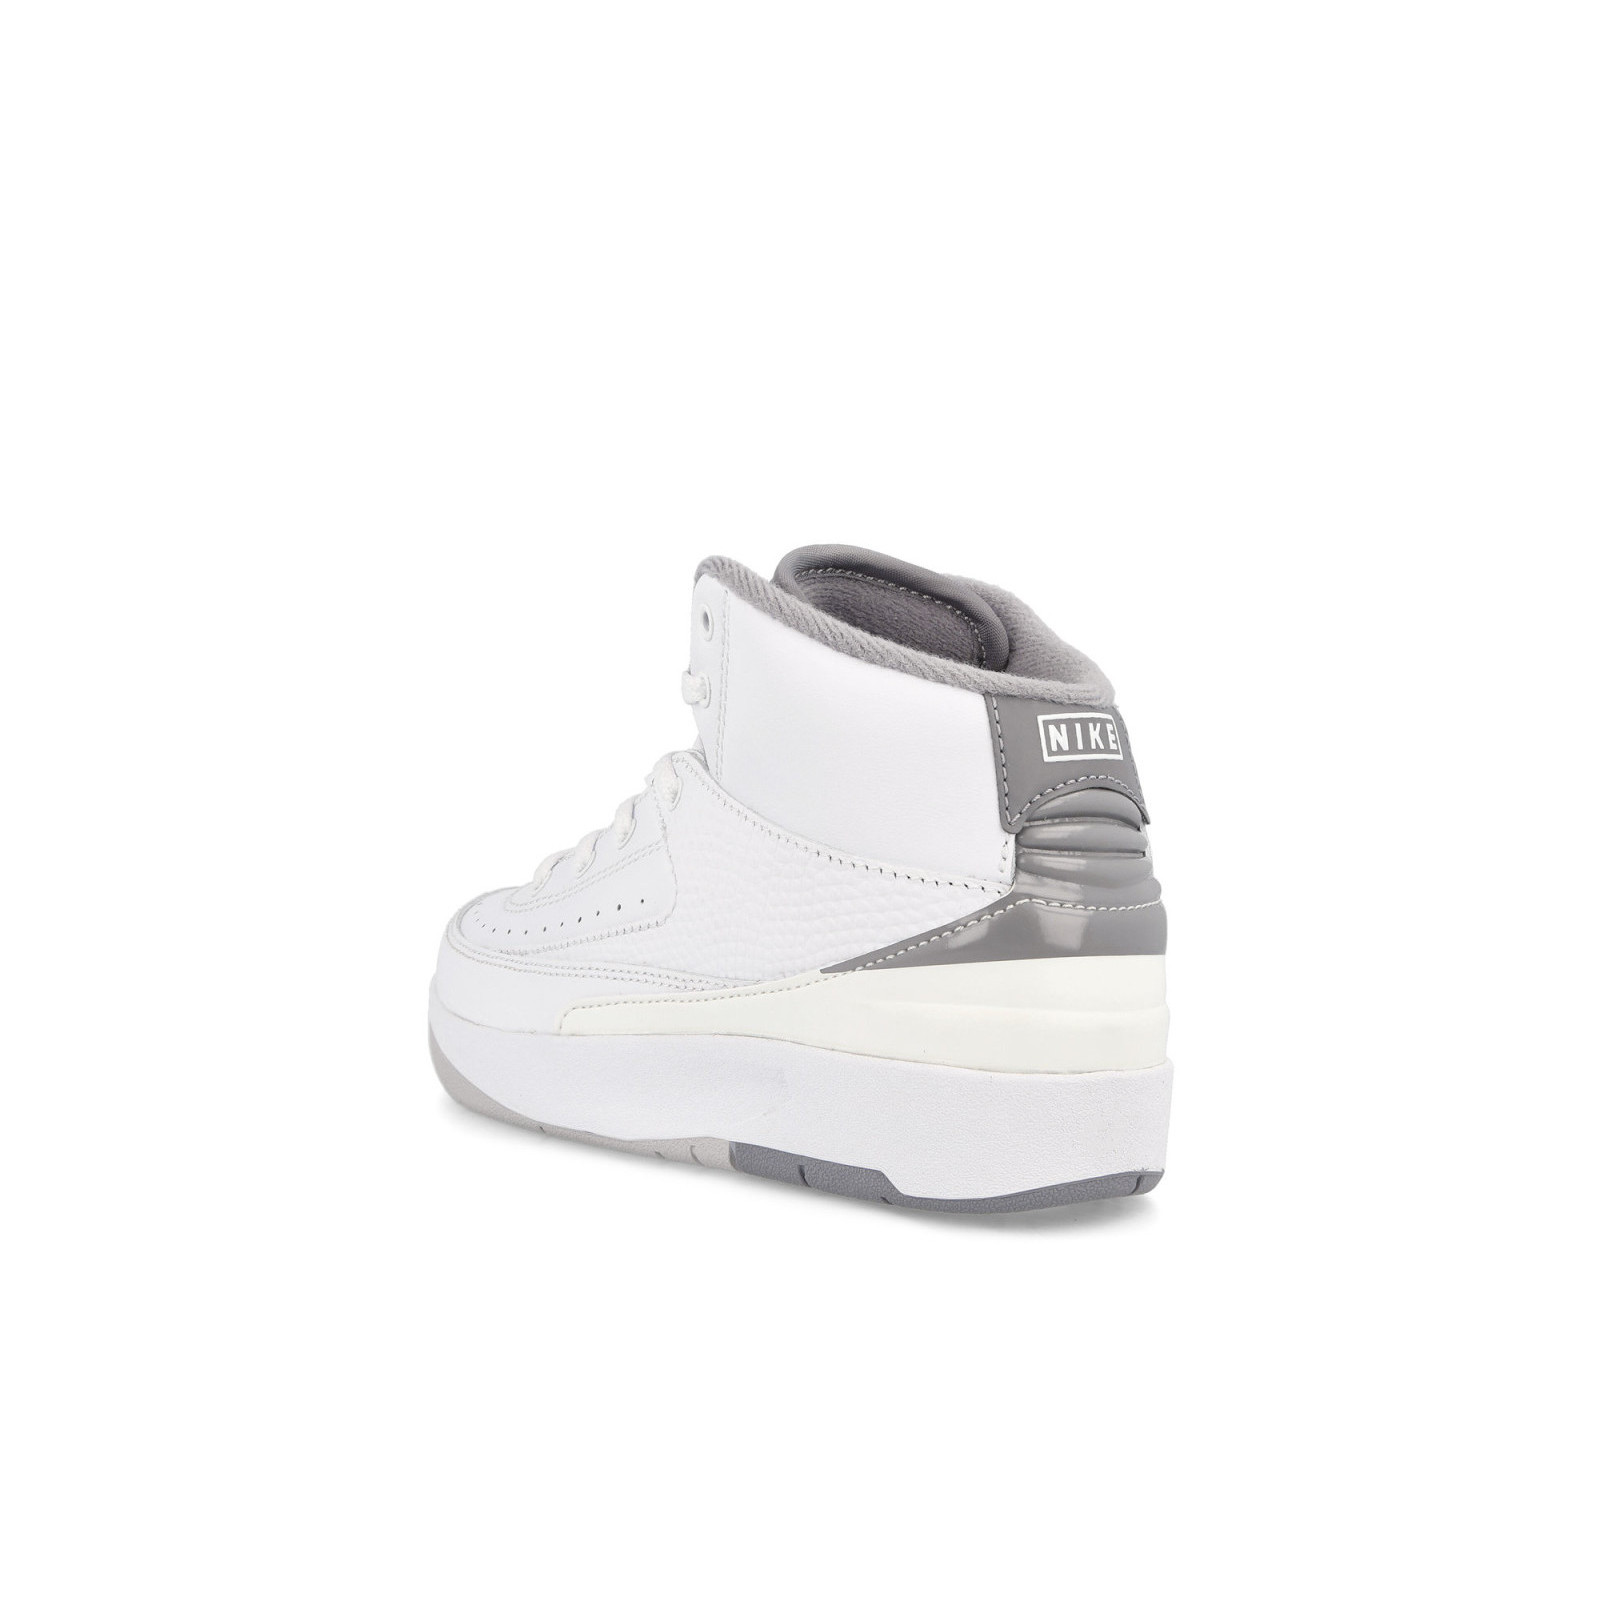 Air Jordan 2 Retro (PS)
« Cement Grey »